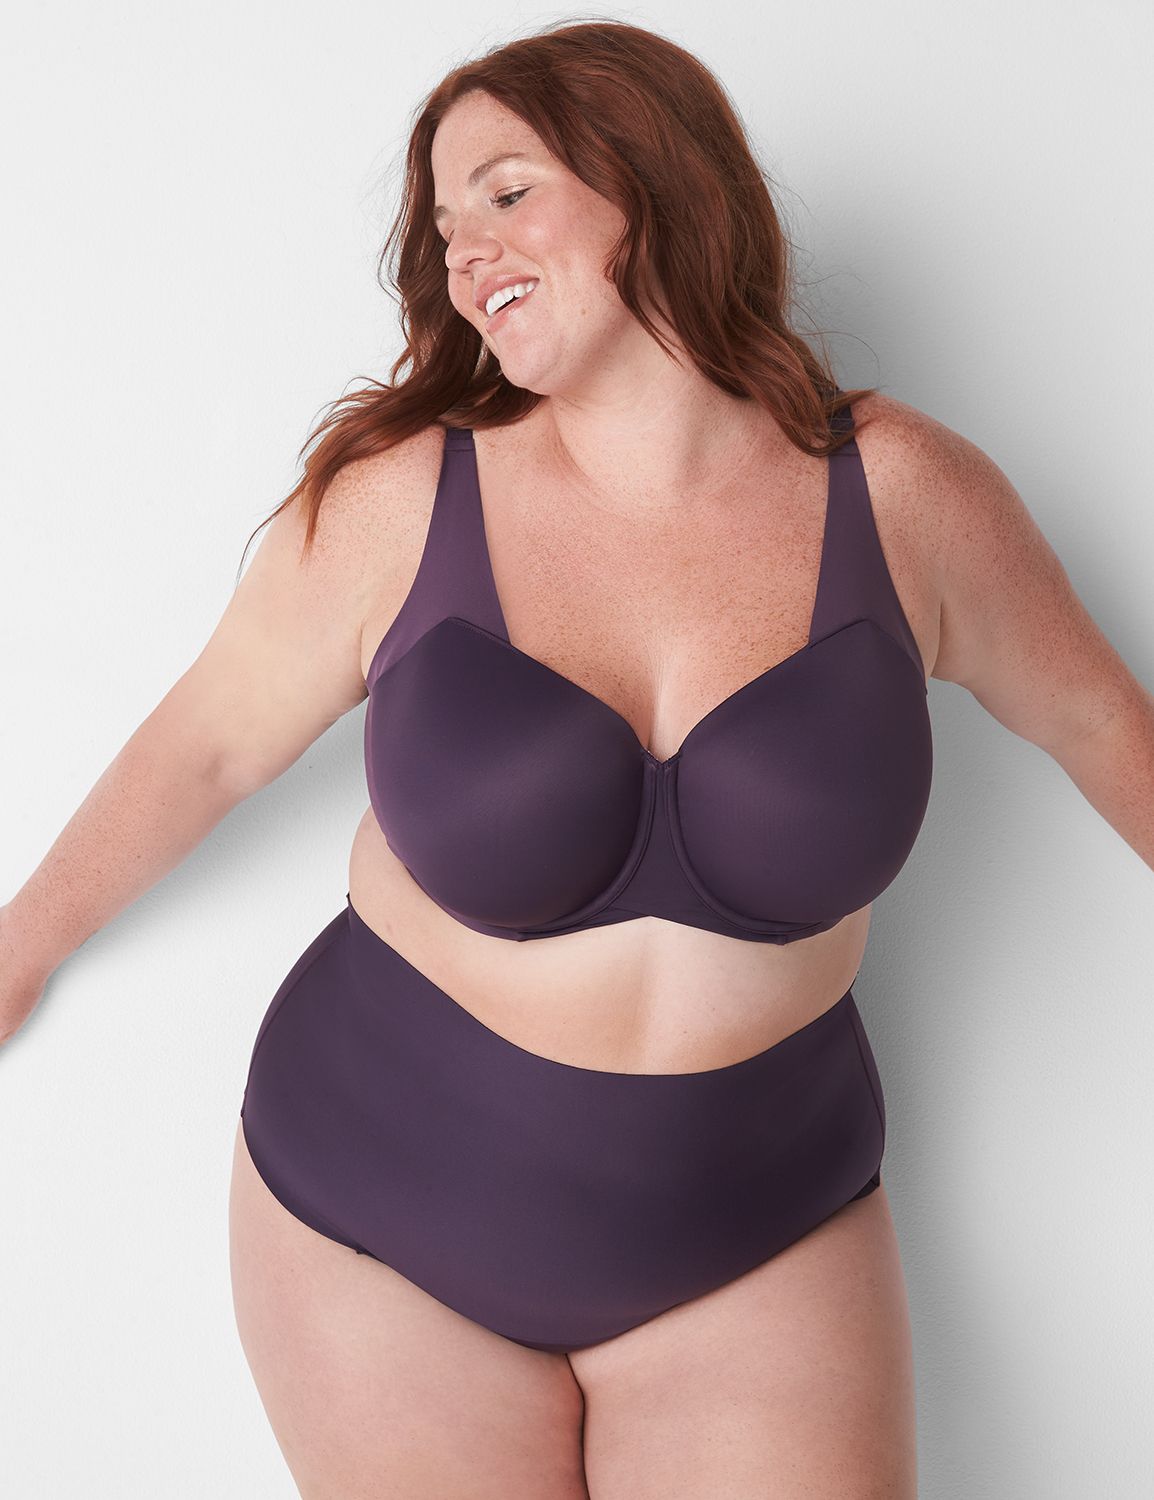 38d violet bra, Women's Fashion, New Undergarments & Loungewear on Carousell